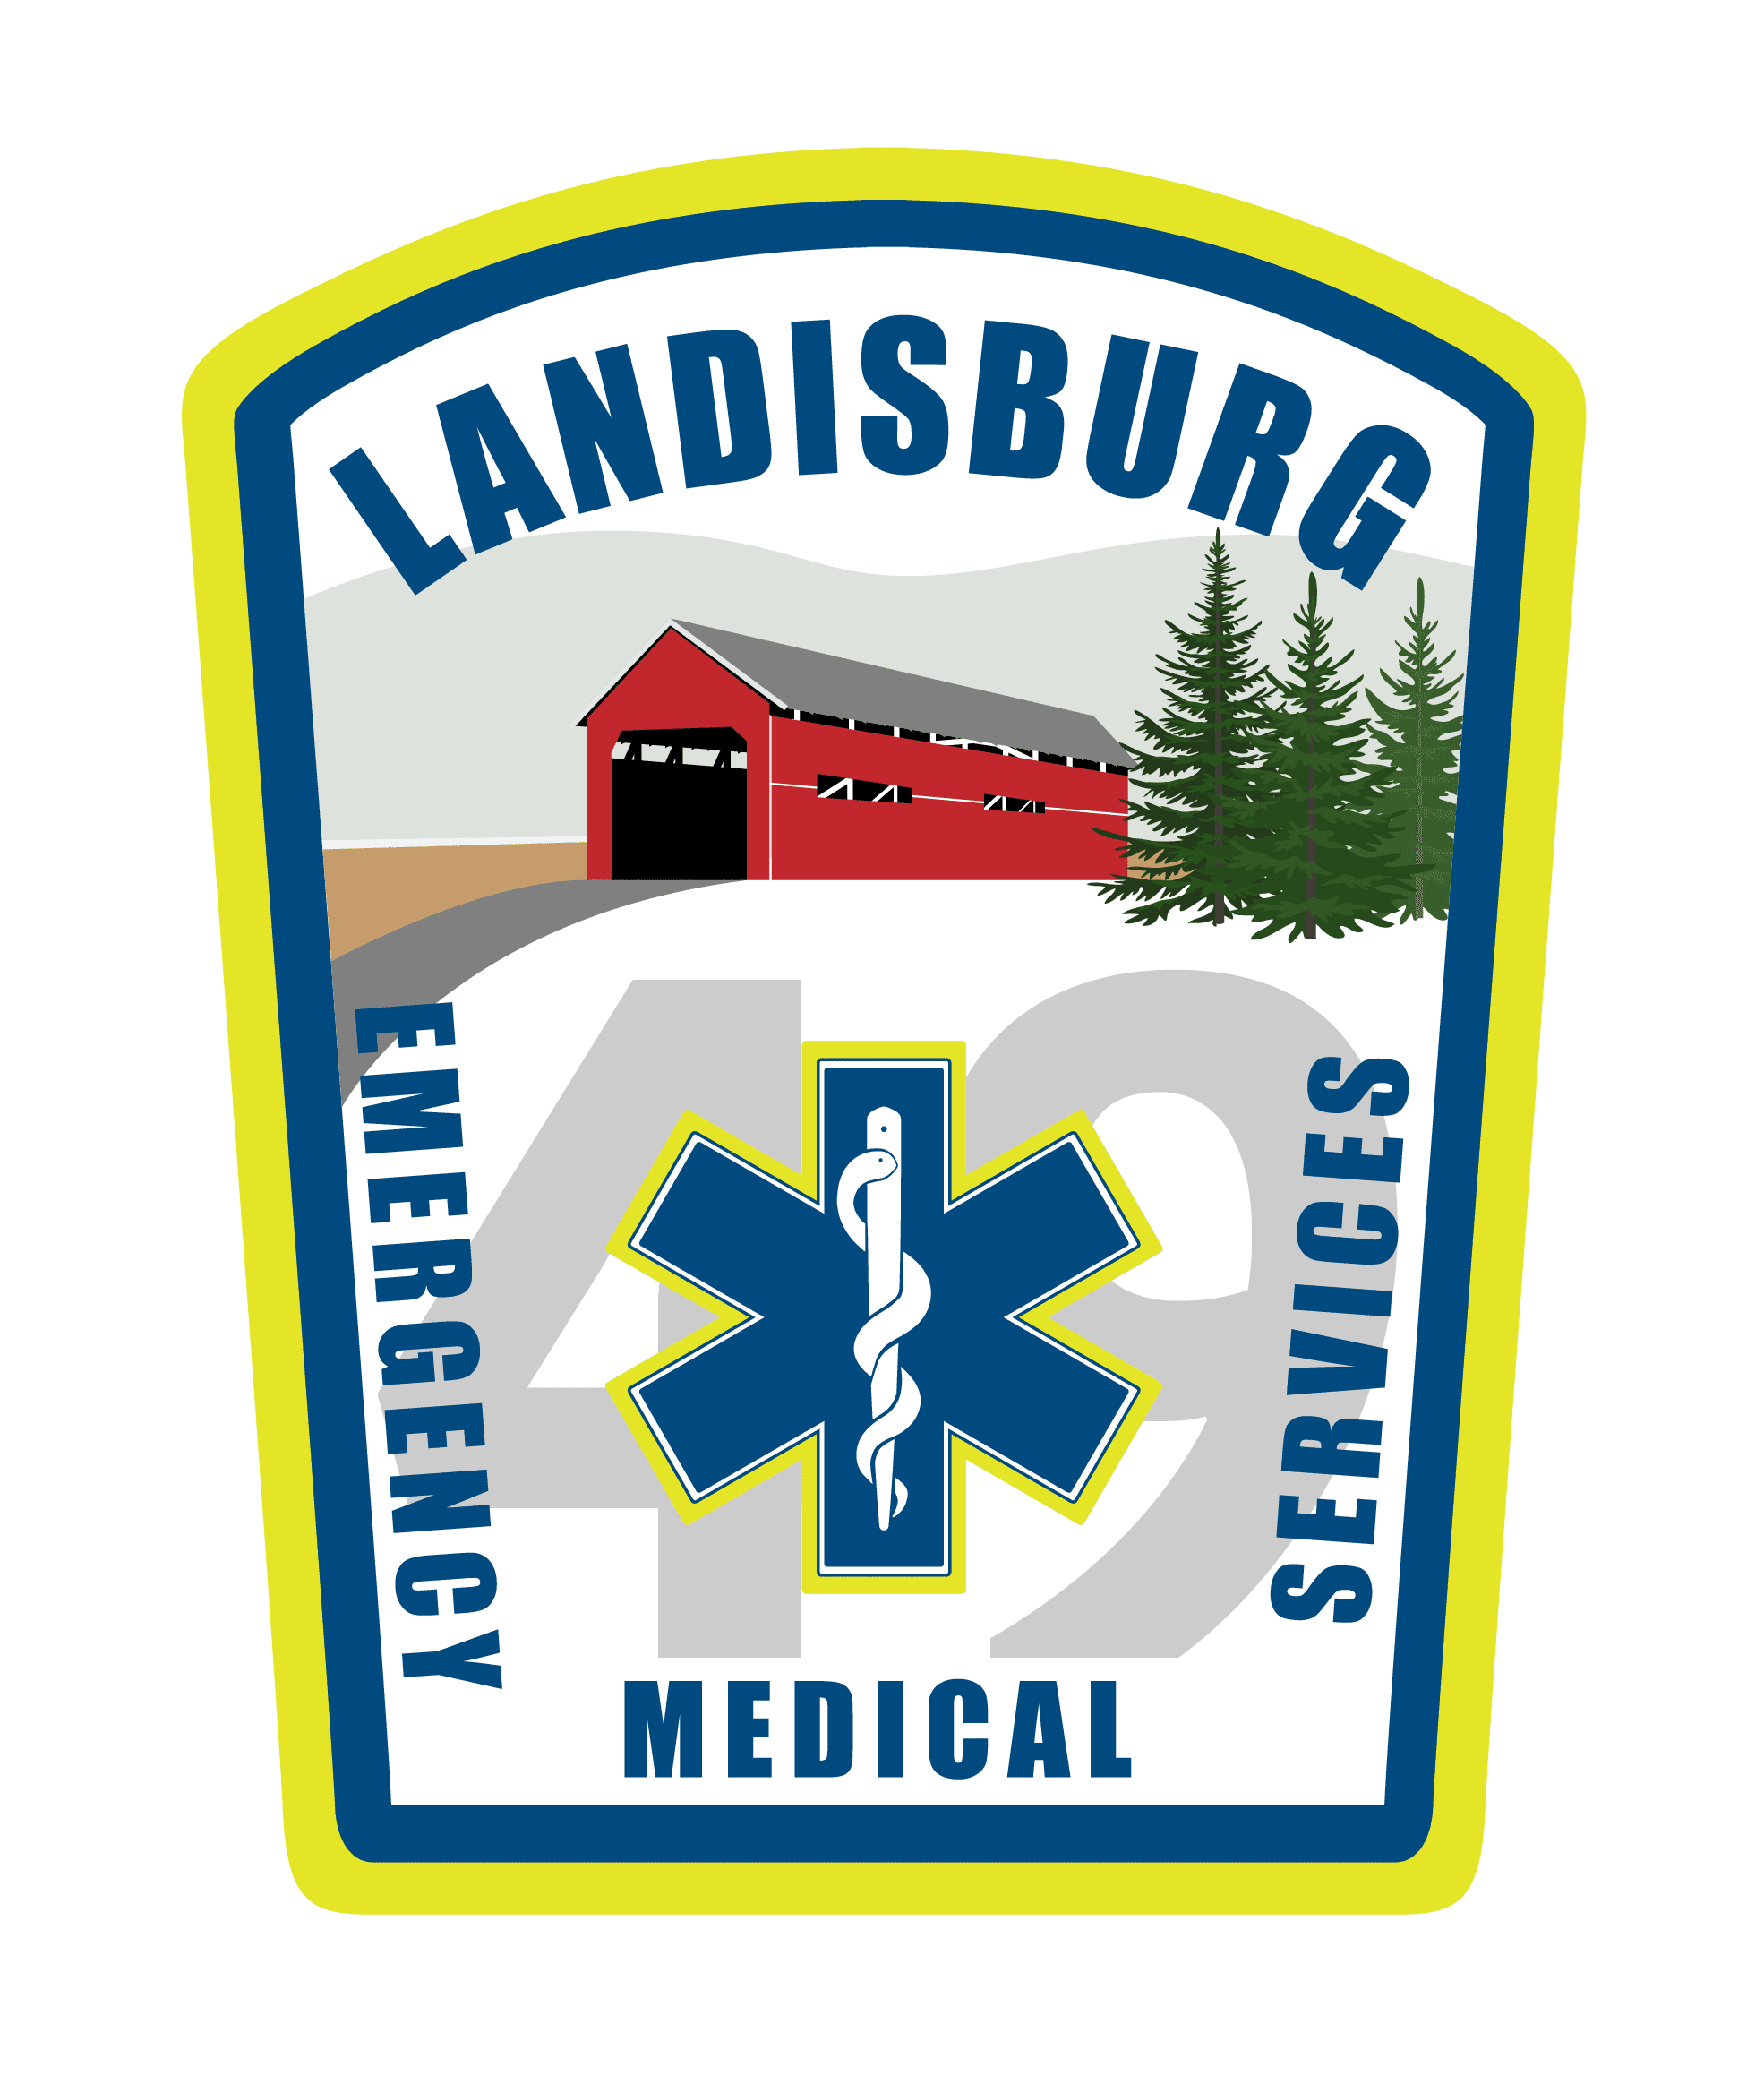 North Carolina - Advanced EMT Patch